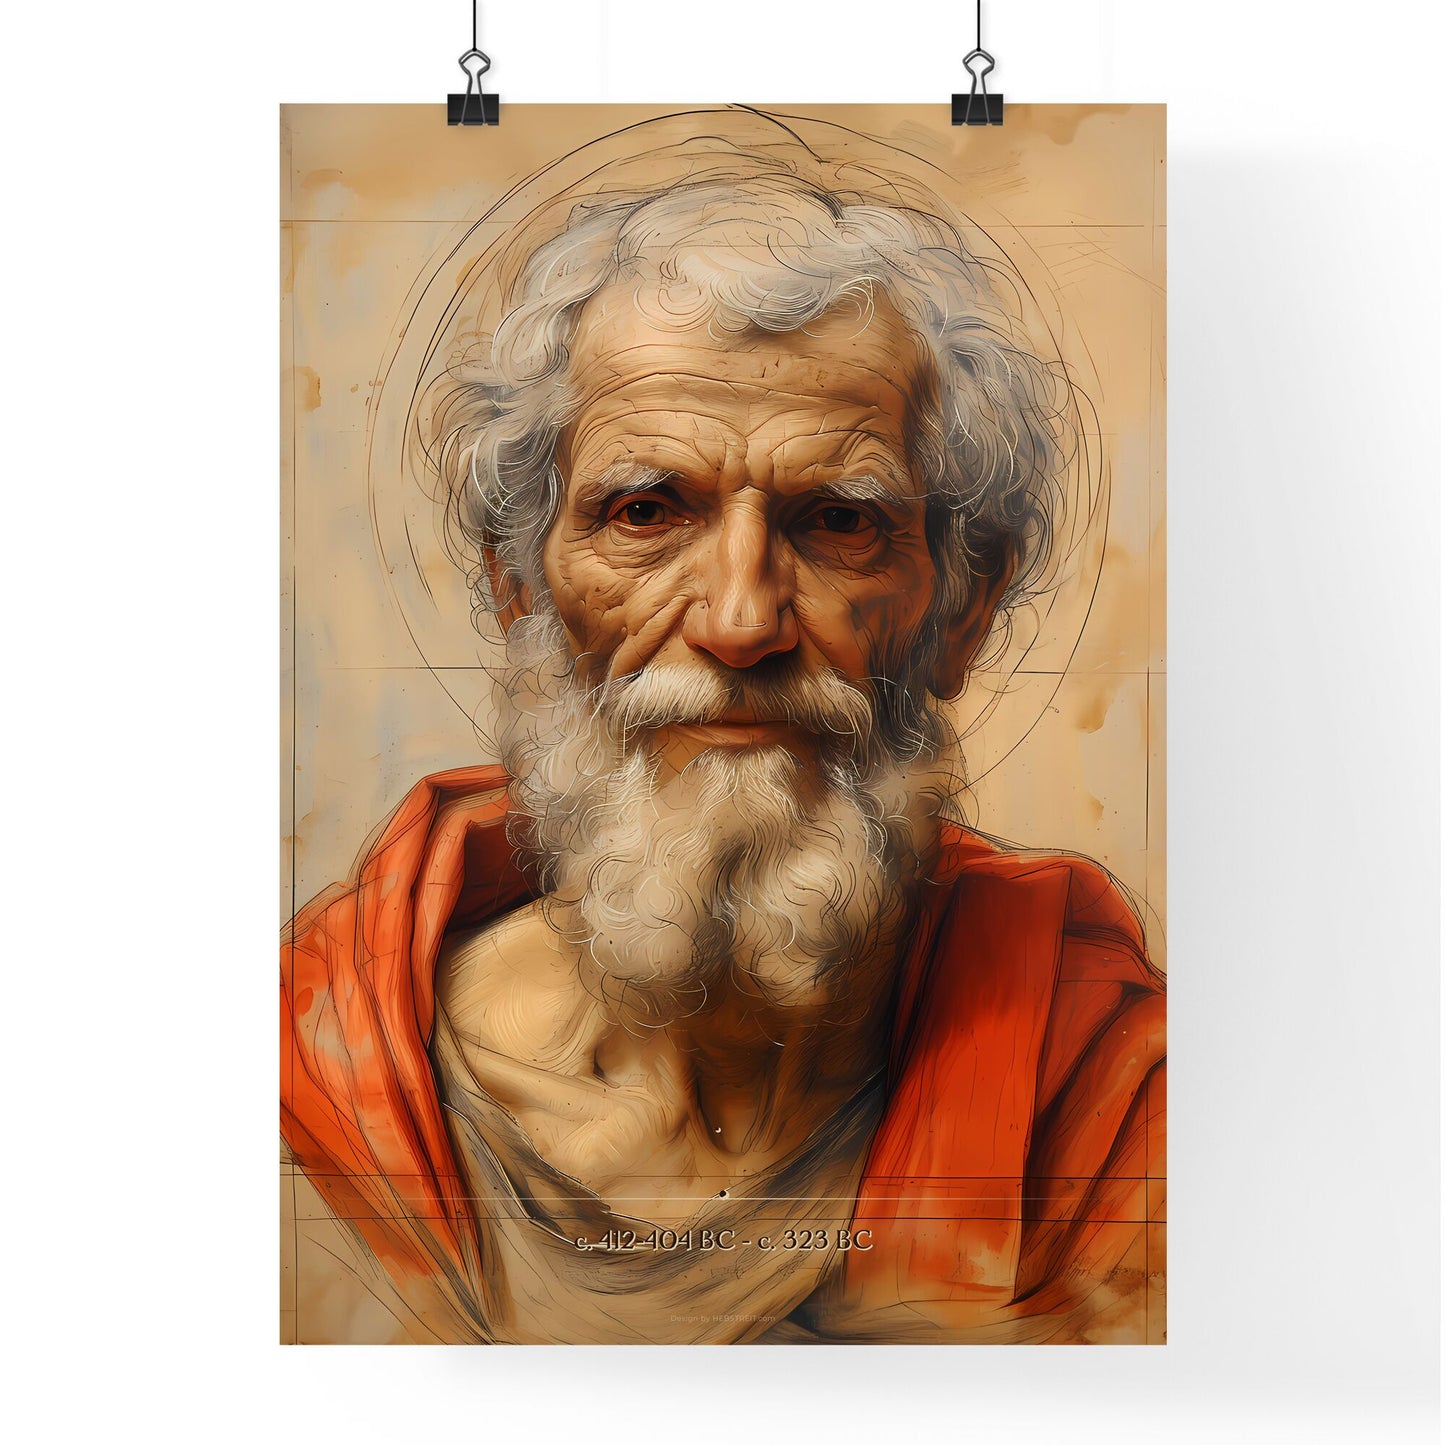 c. 412-404 BC - c. 323 BC, A Poster of a painting of a man with a beard Default Title